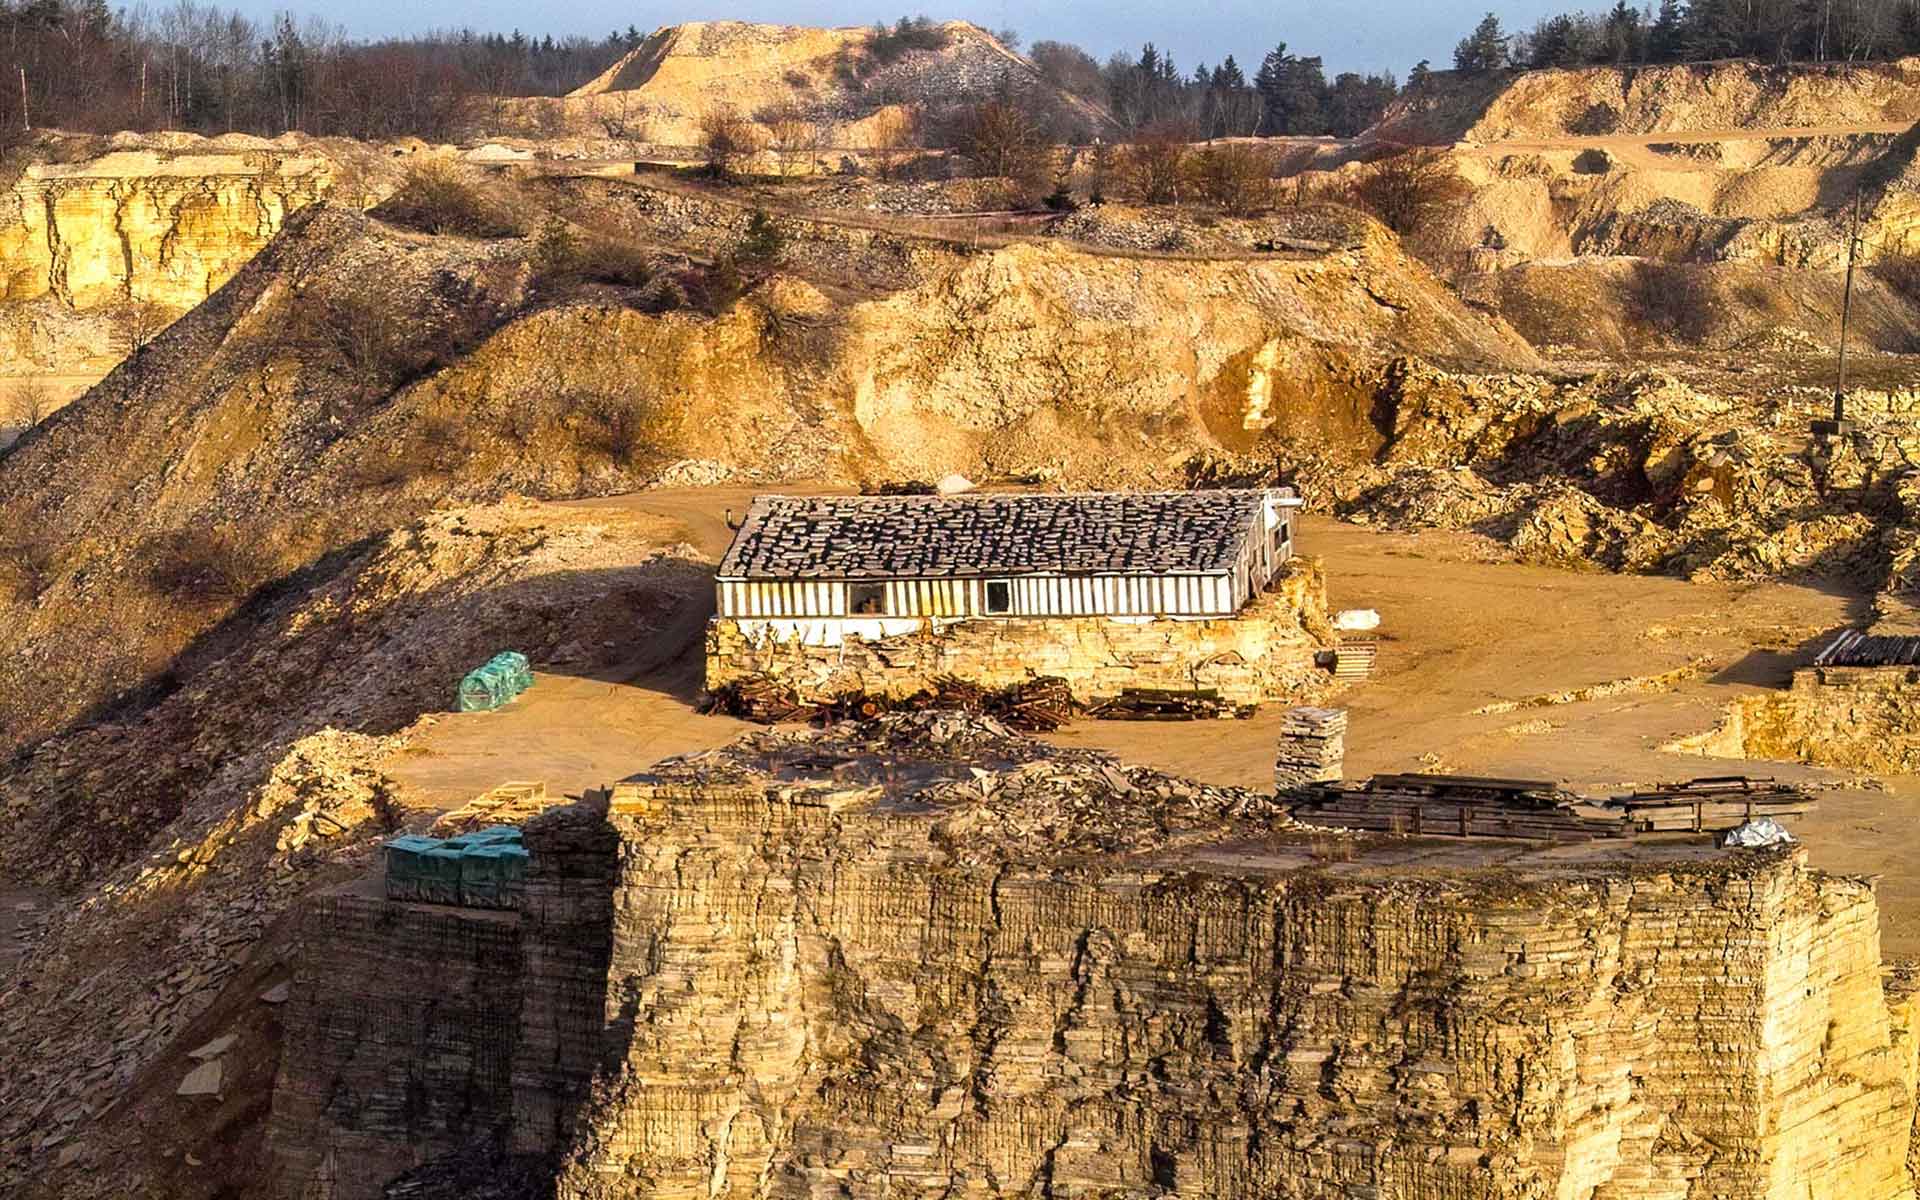 Panoramic view of a quarry near Solnhofen